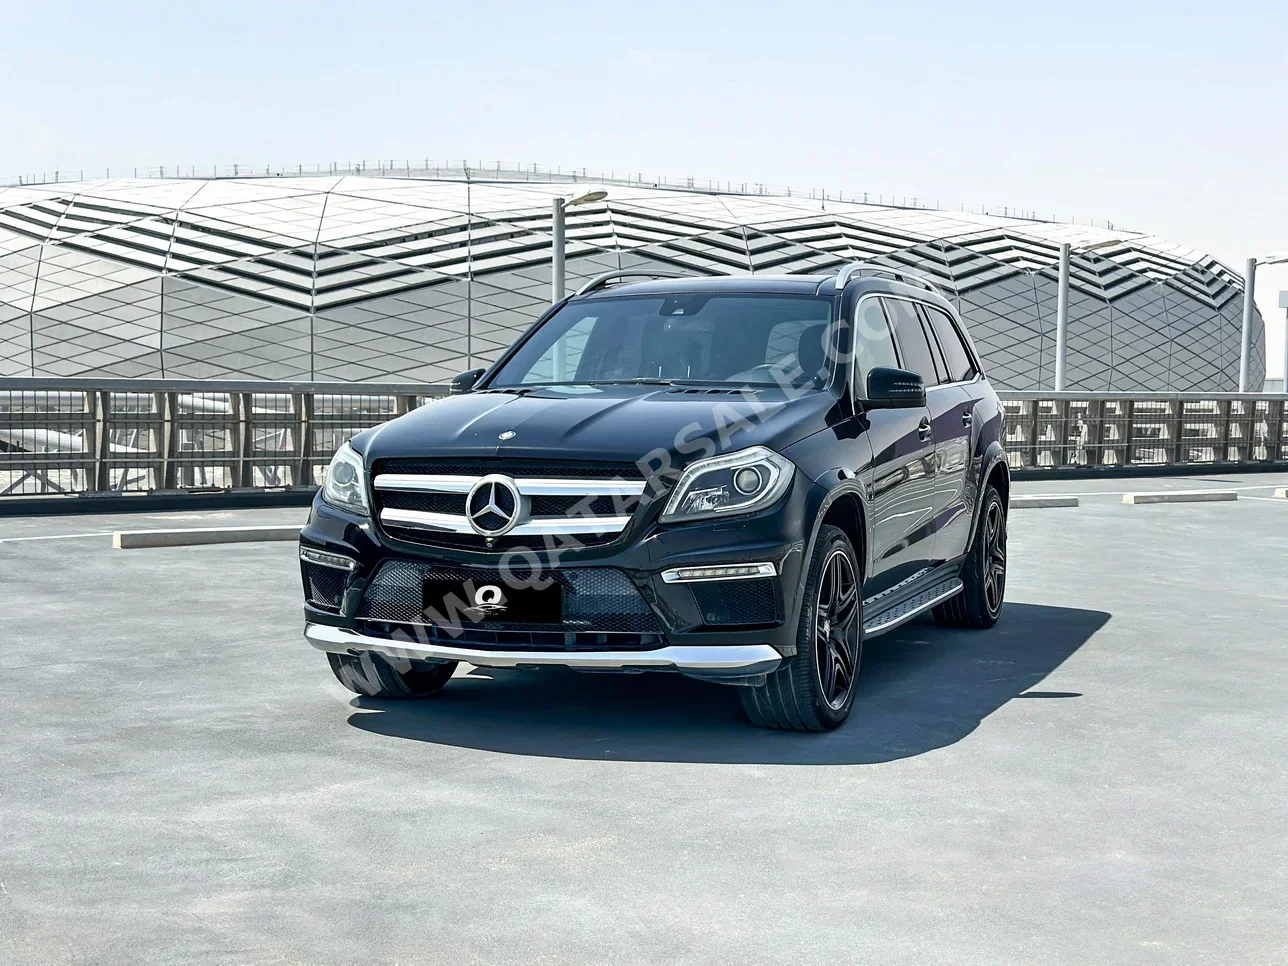 Mercedes-Benz  GL  500  2016  Automatic  48,000 Km  8 Cylinder  Four Wheel Drive (4WD)  SUV  Black